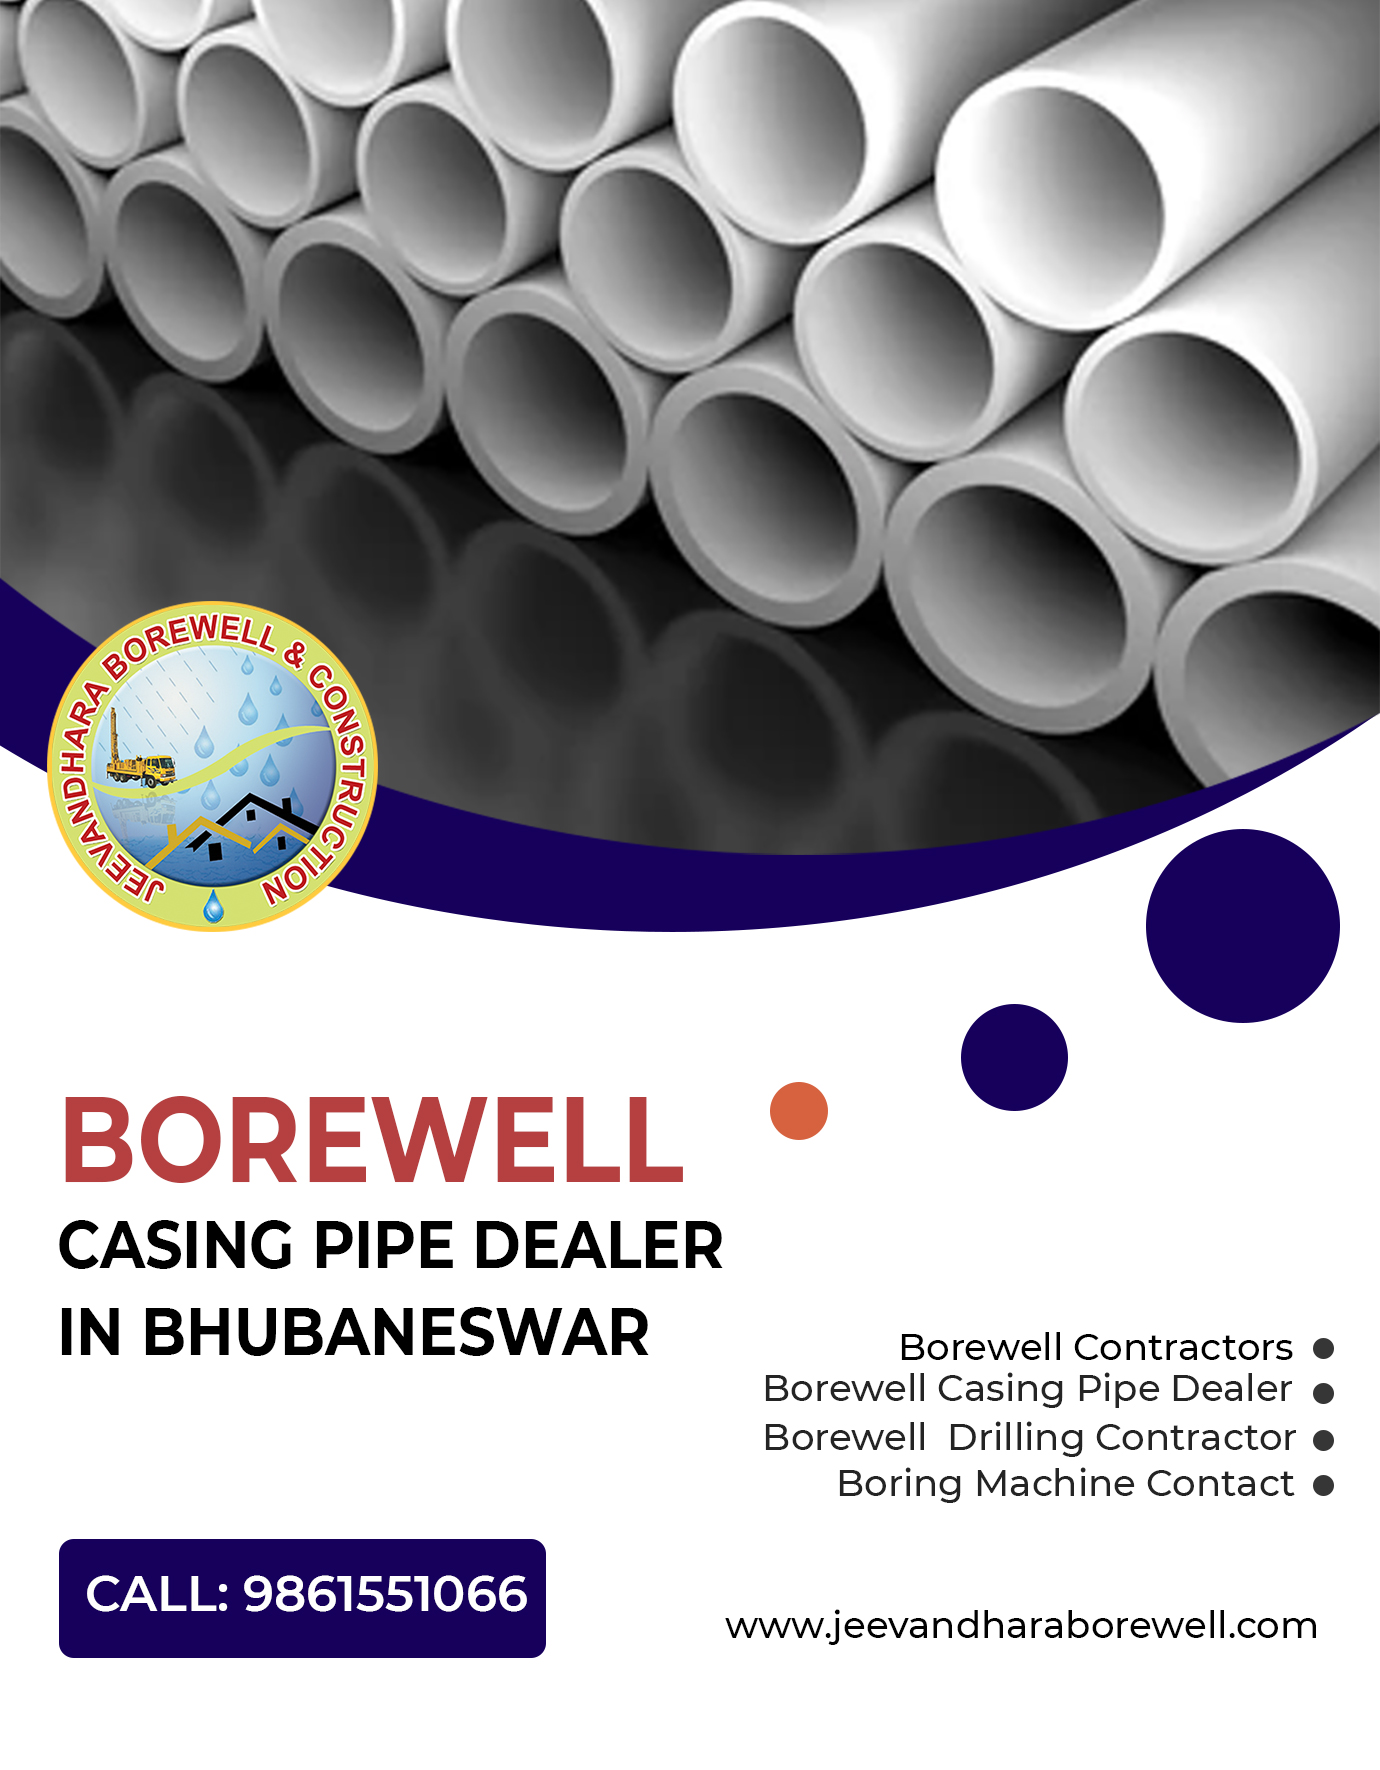 Borewell Casing Pipe Dealer in Bhubaneswar